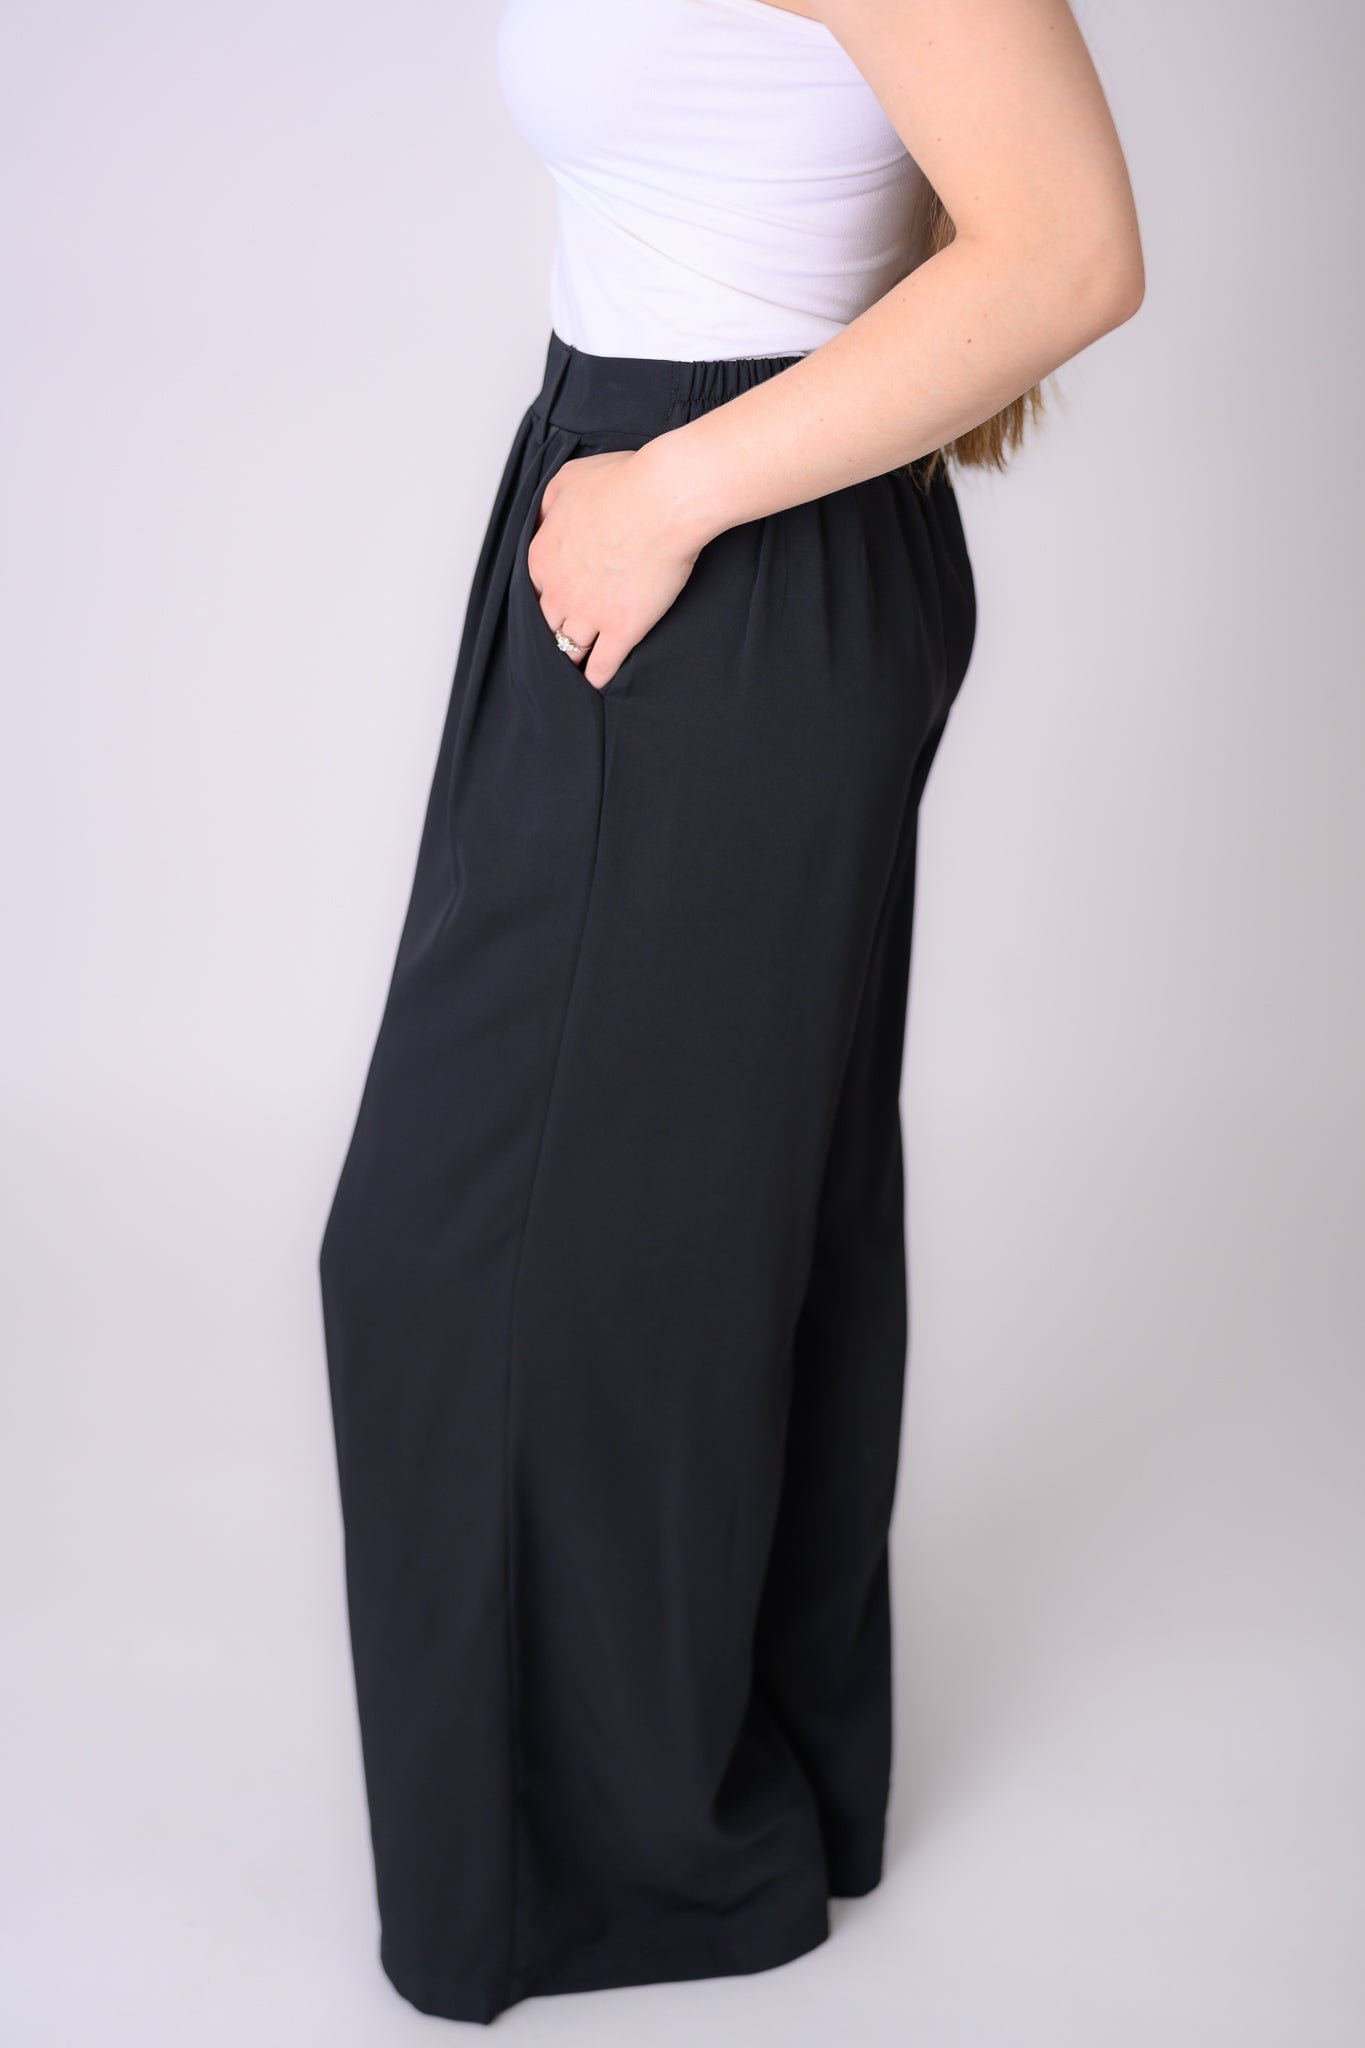 Pleated Solid Dress Pants - Black